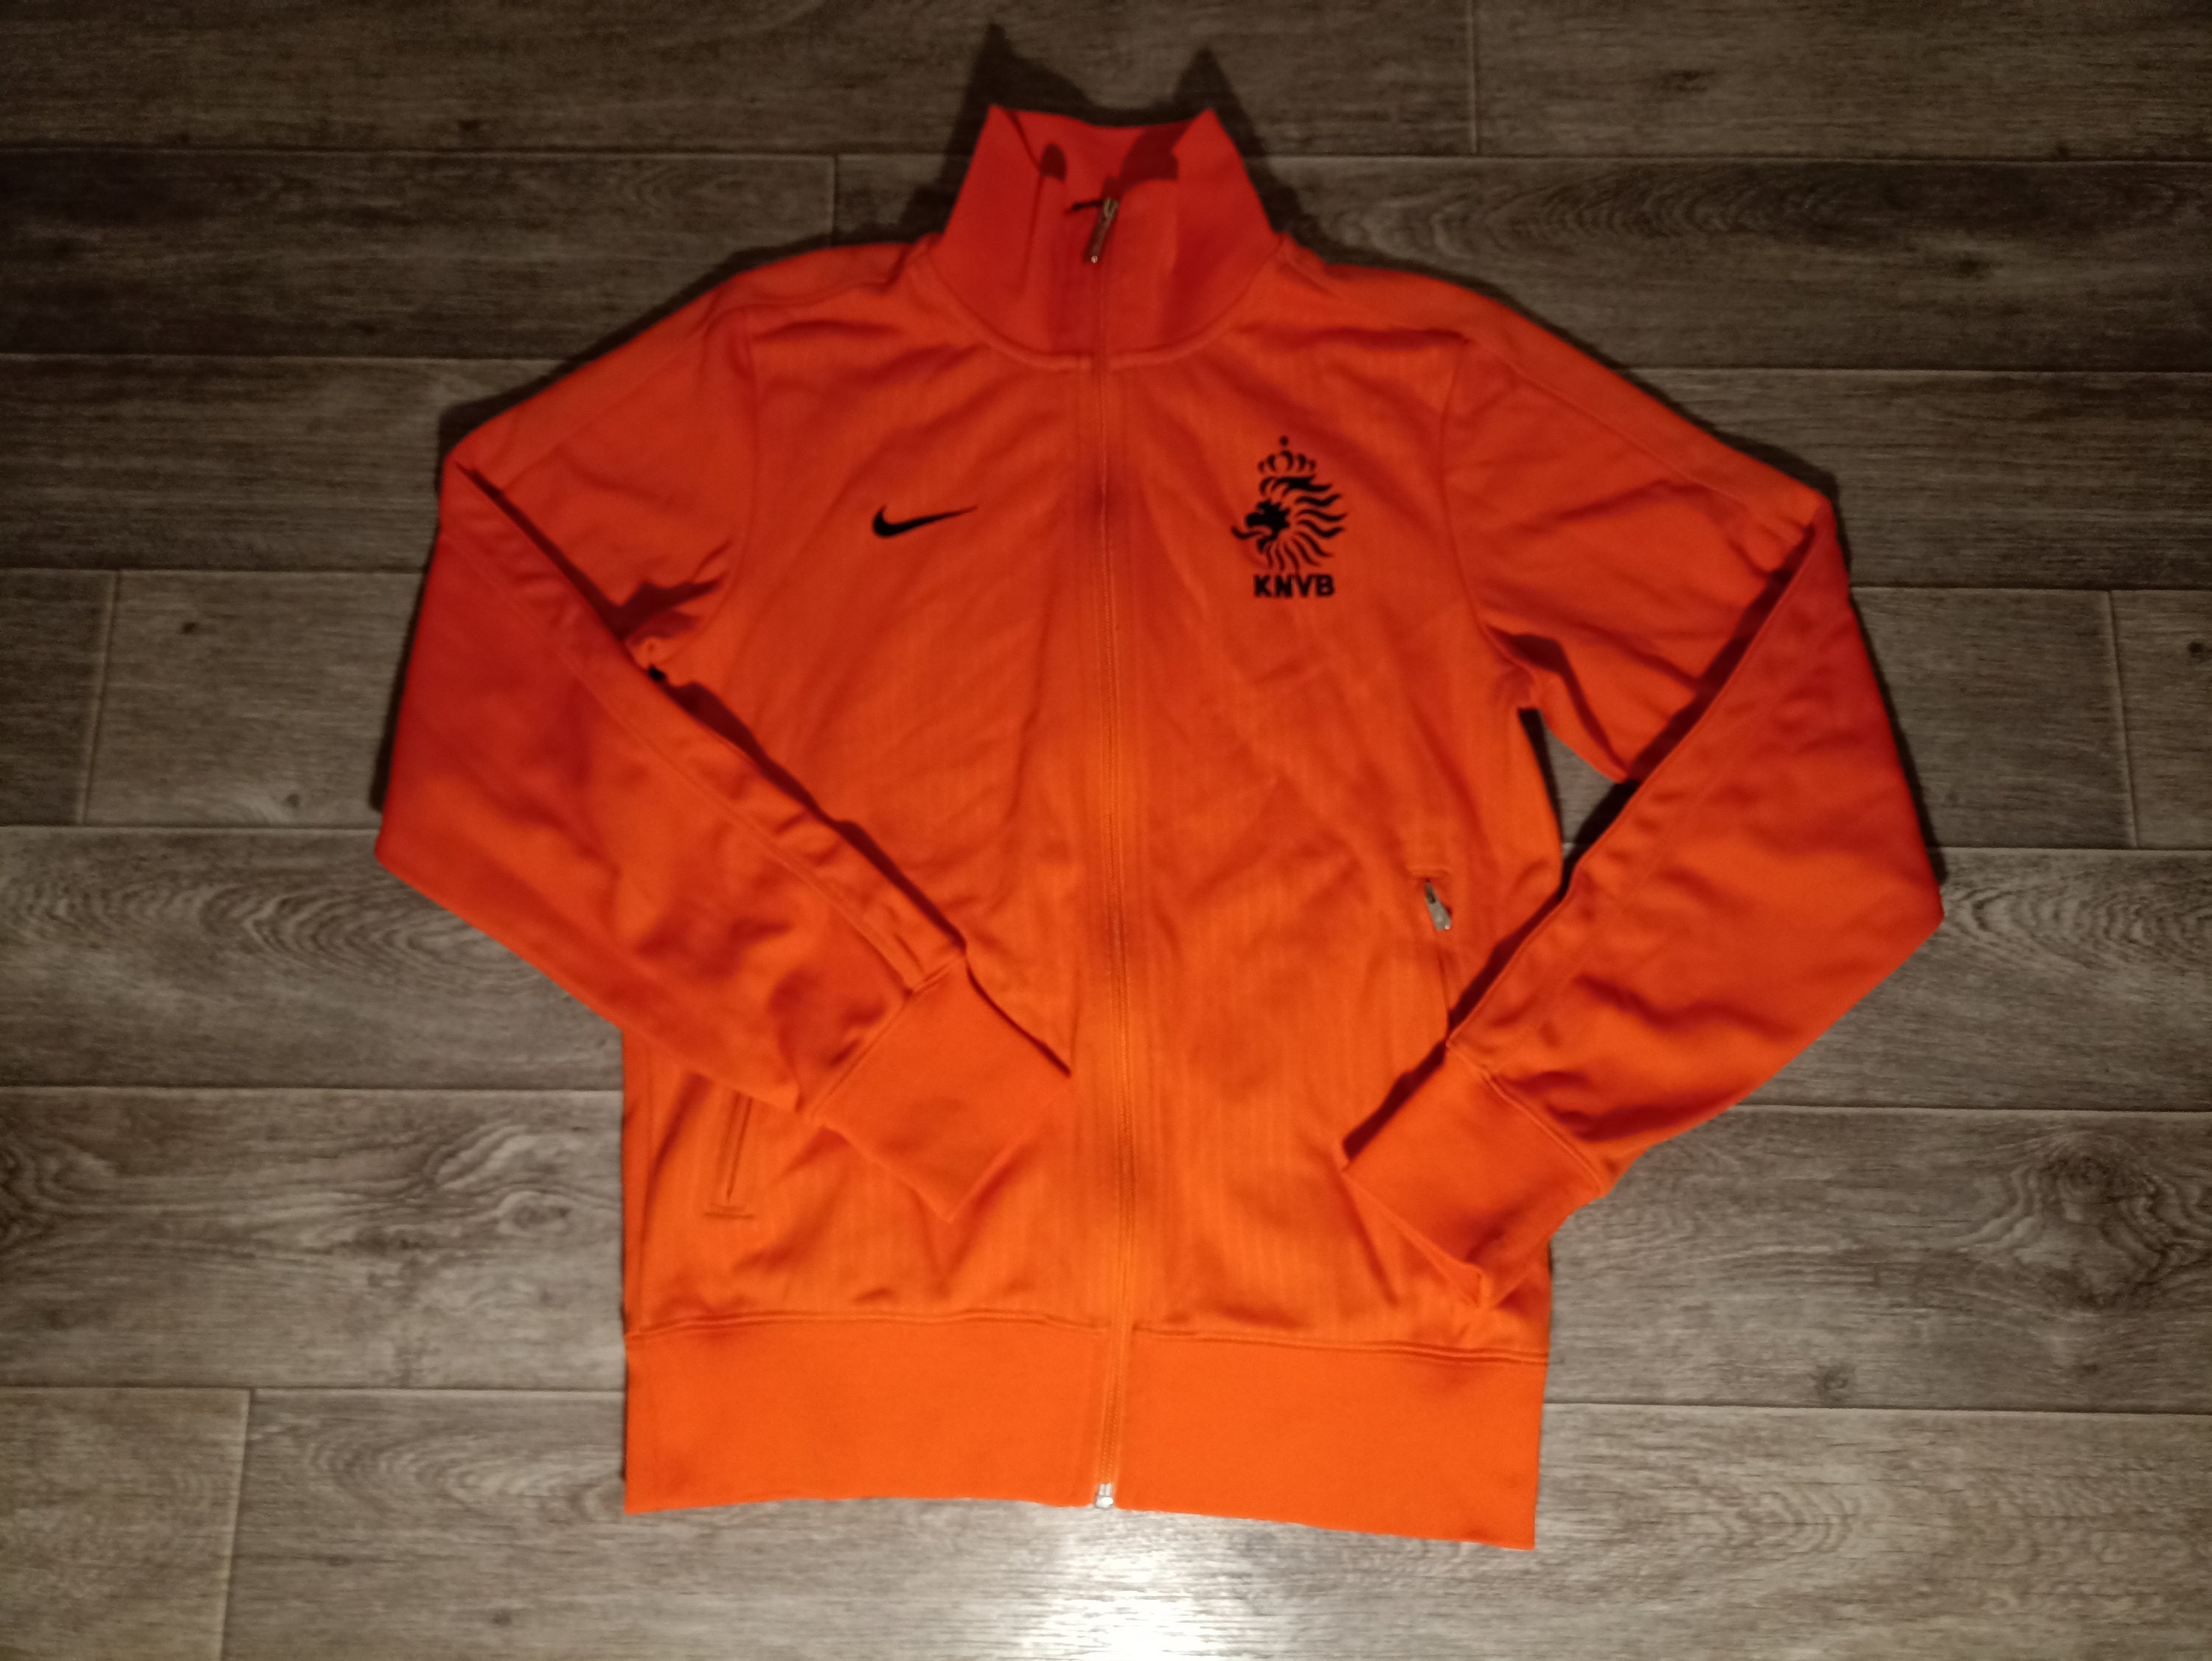 KNVB Pin Royal Dutch Football Association Very Small Rare Orange & Silver  Colors